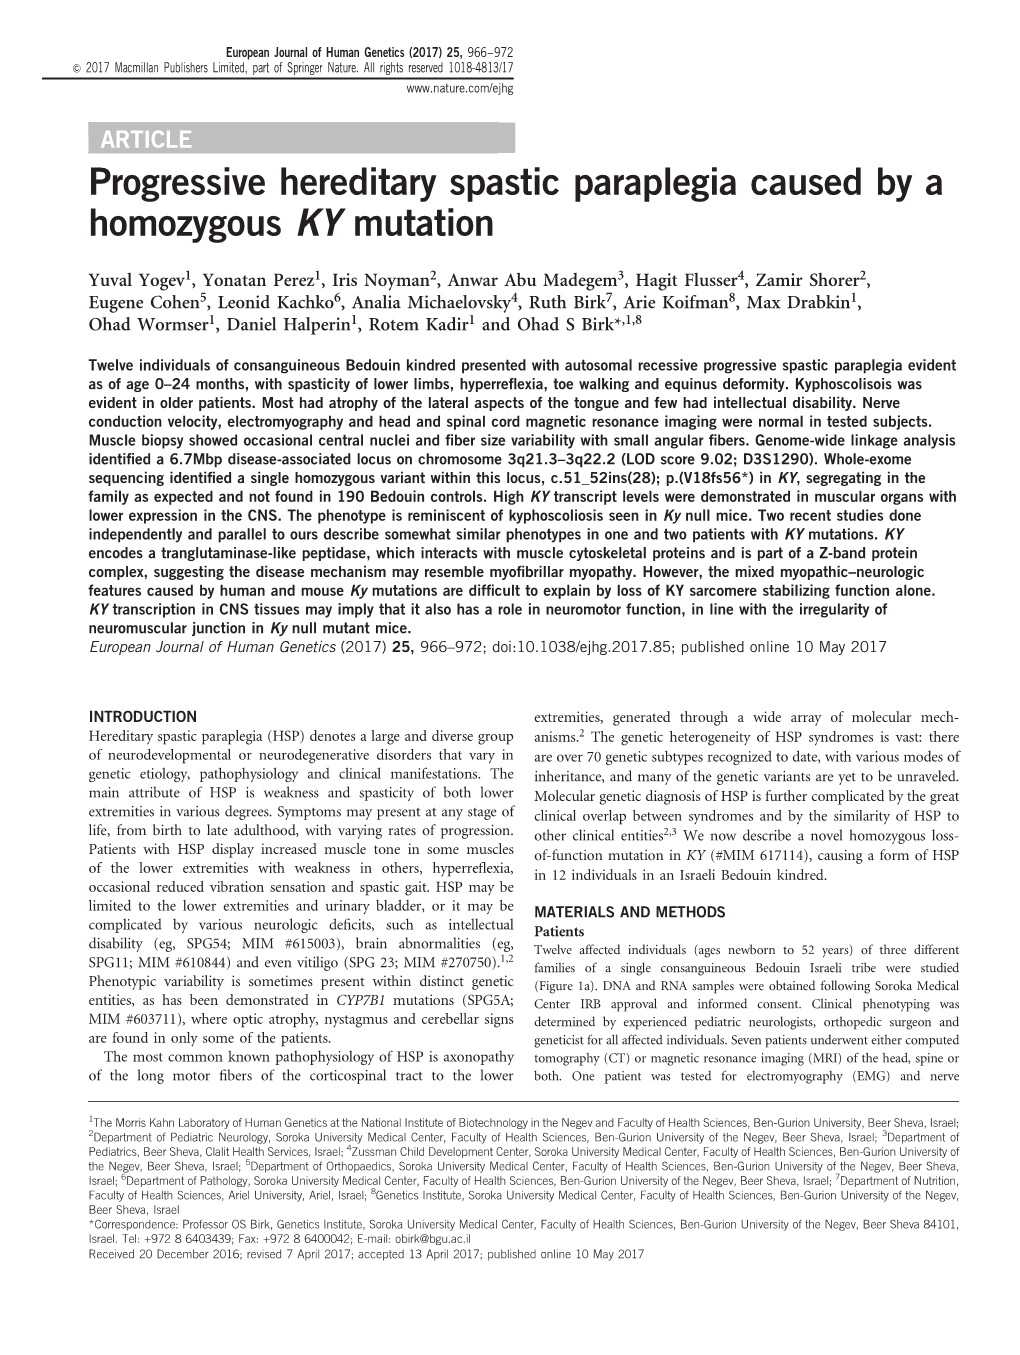 Progressive Hereditary Spastic Paraplegia Caused by a Homozygous KY Mutation